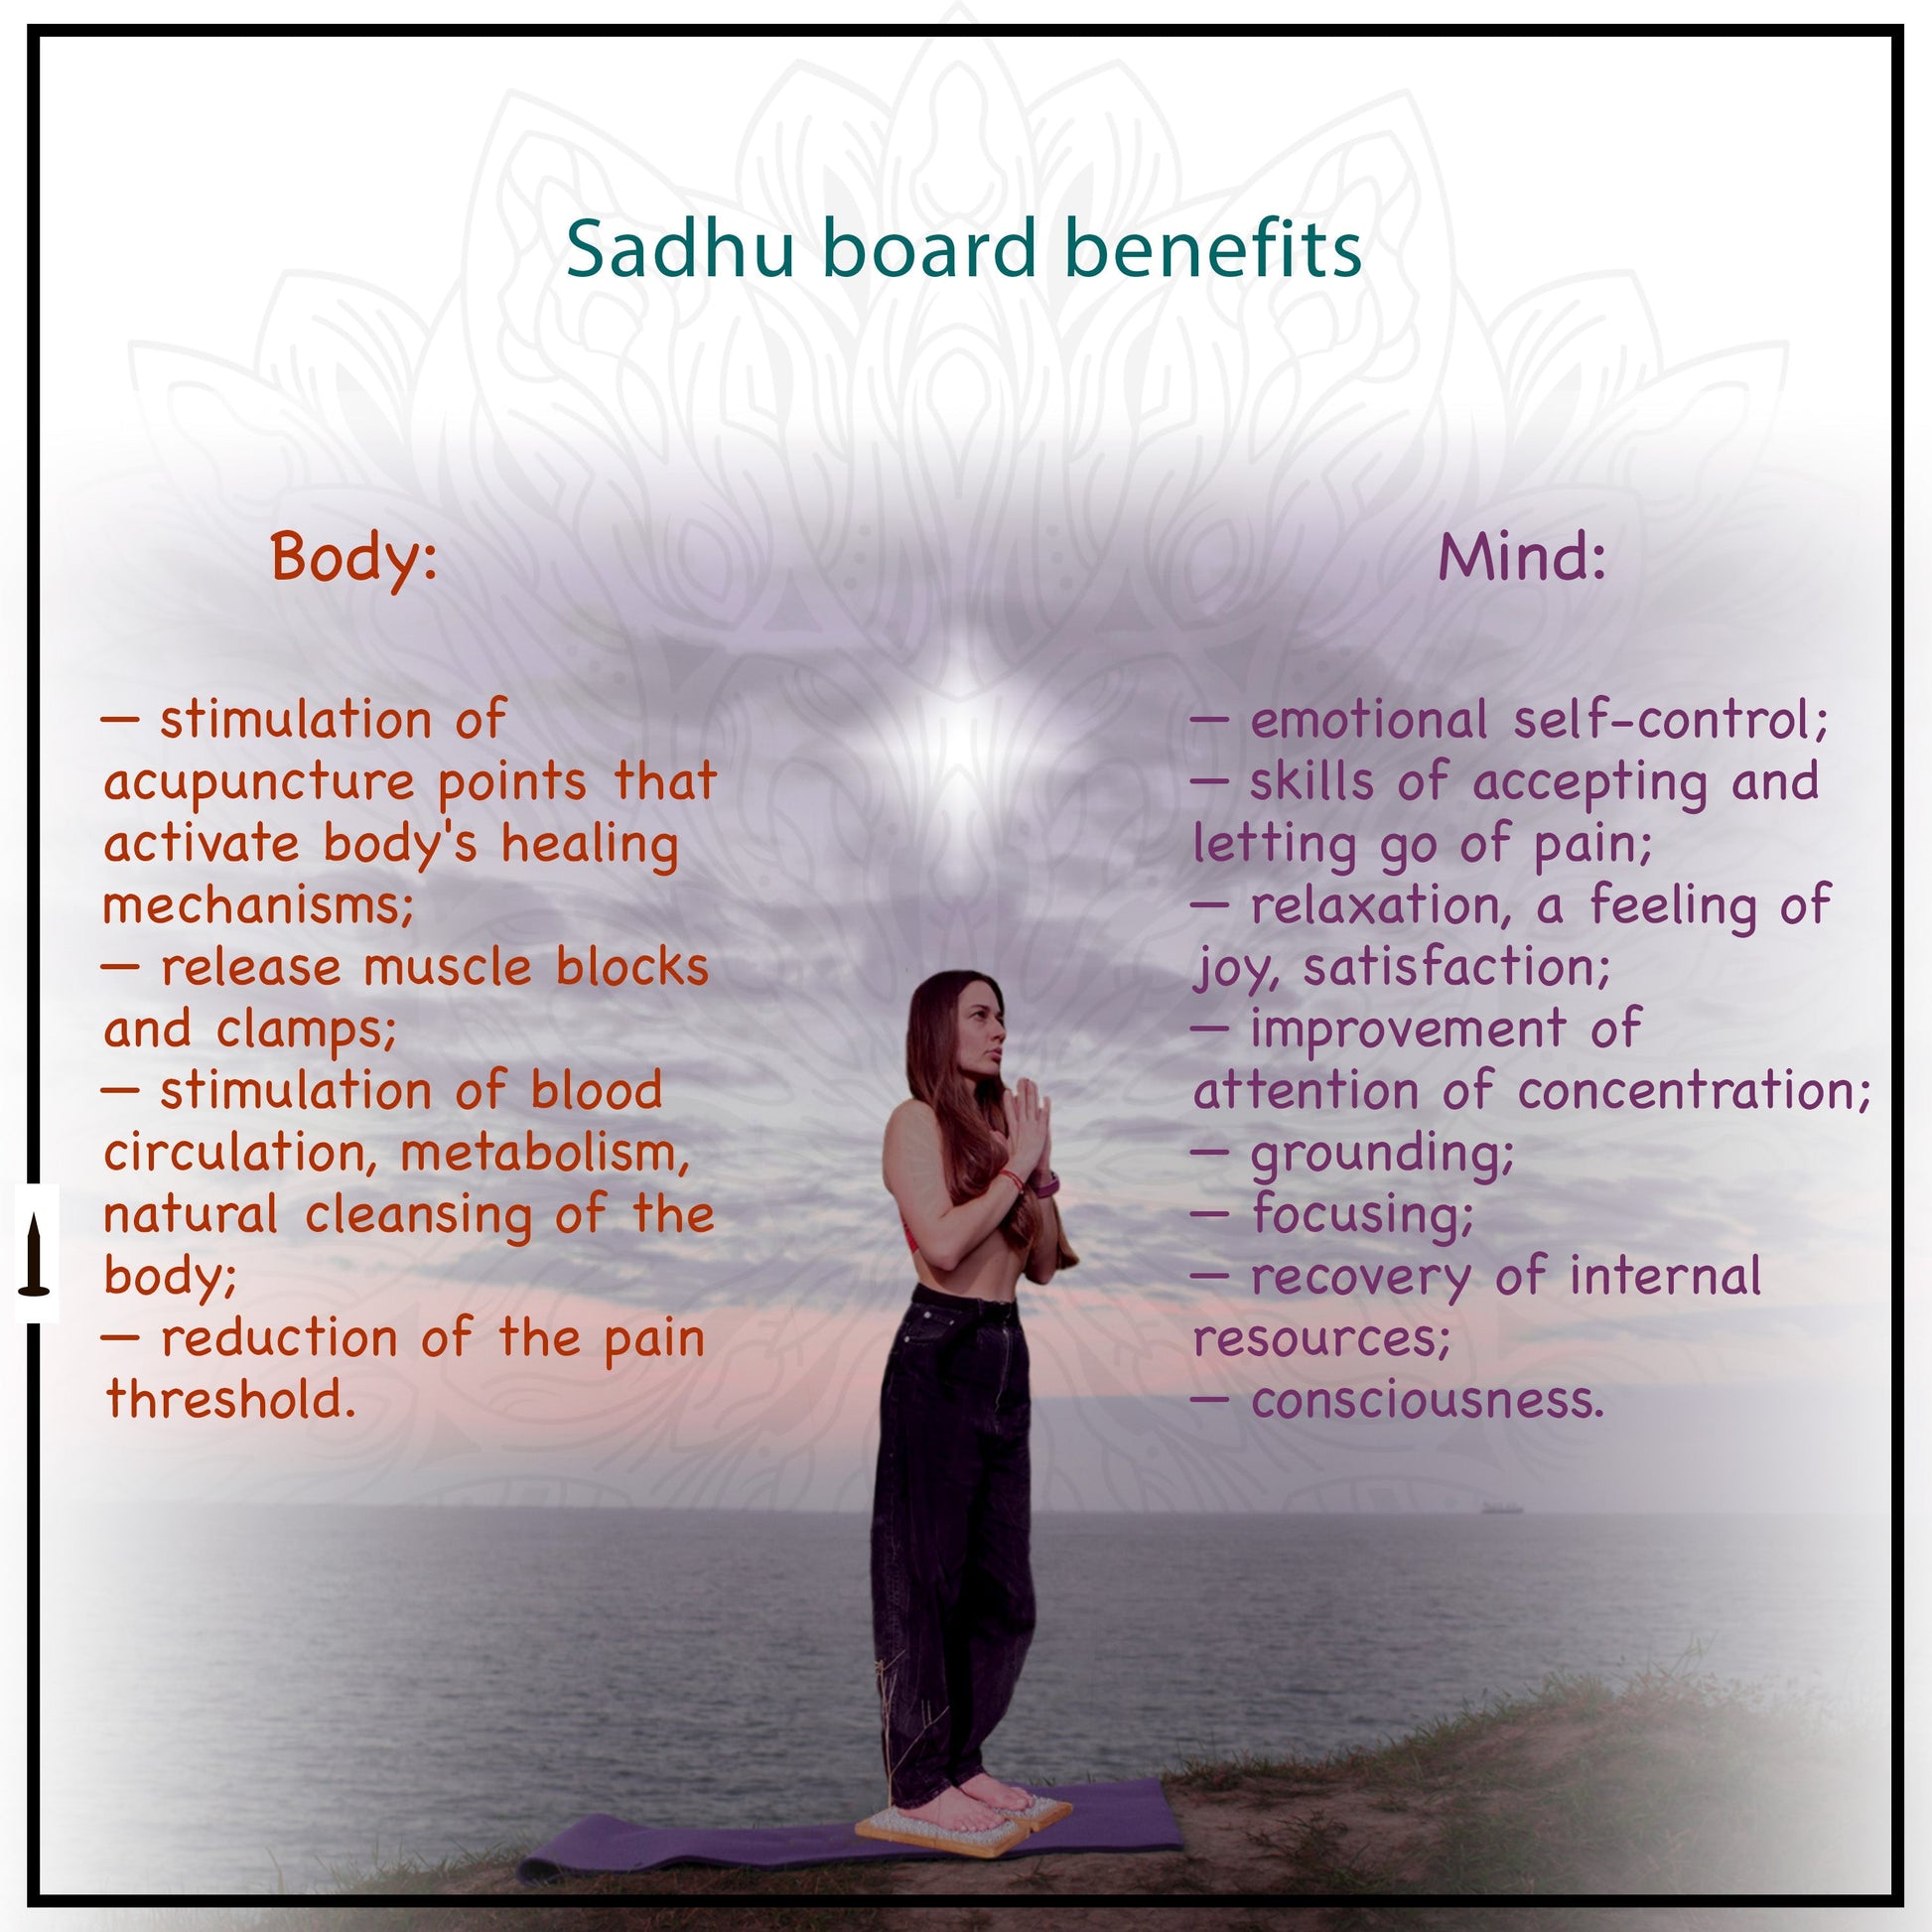 sadhu boards benefits, yogis standing on sadhu board on seashore